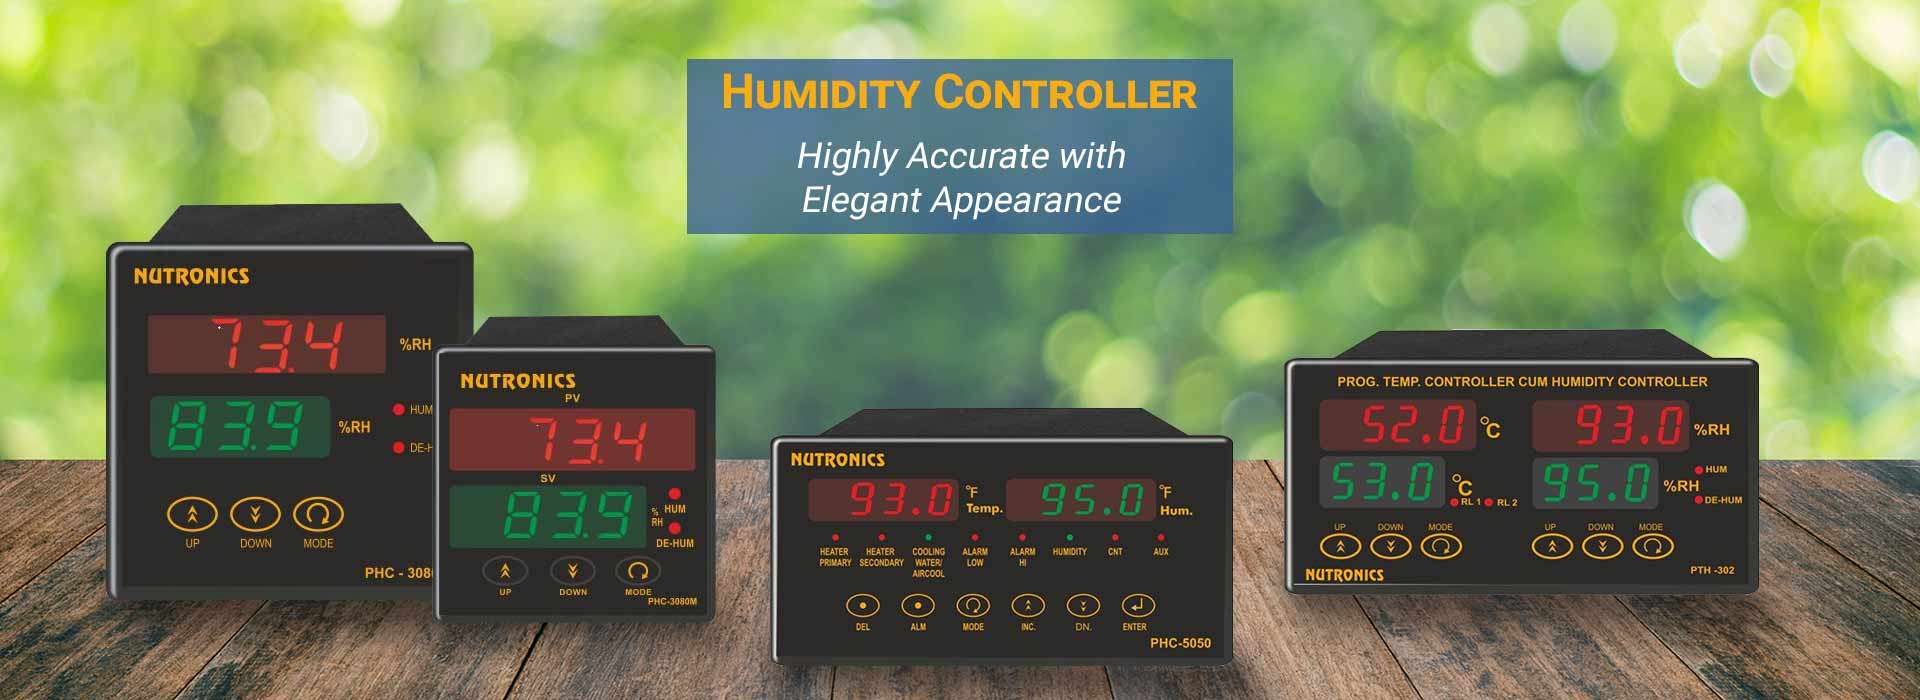  Humidity controller Manufacturers in Rajkot